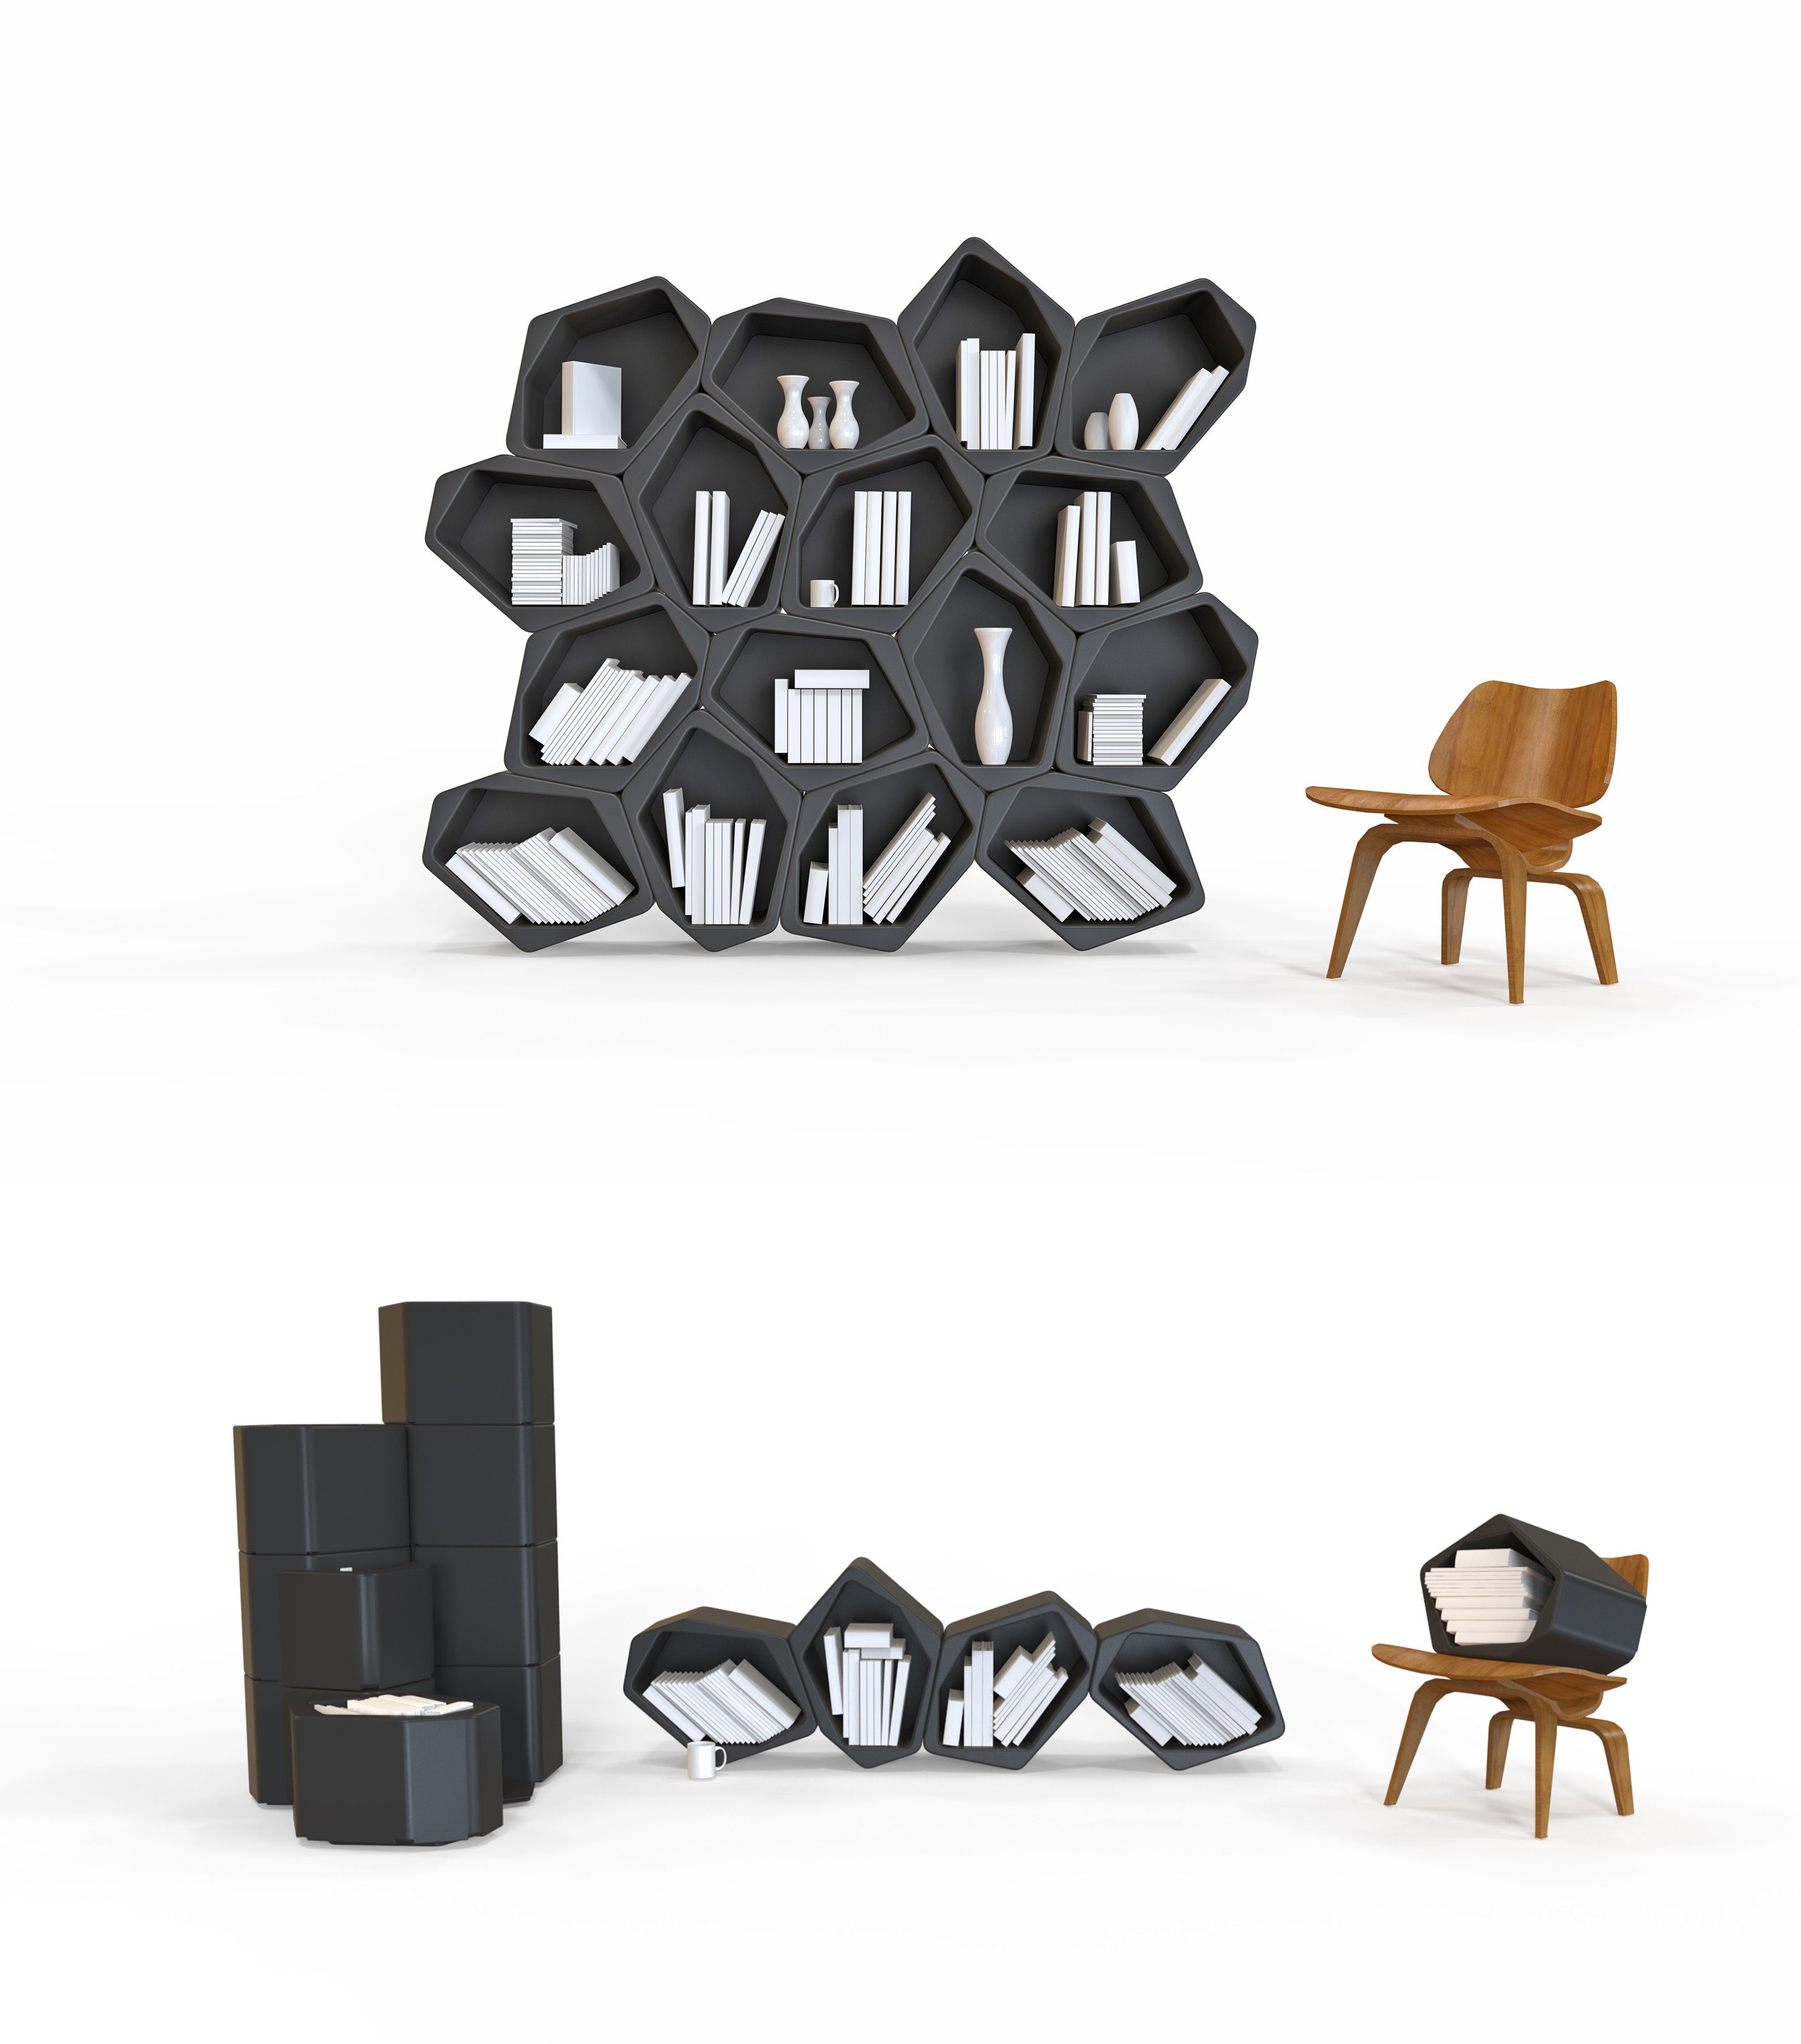 & Hängeregal recyclebar Modulares schadstofffrei Wandregal Wabenregal Regalsystem, BUILD 100% Schwarz 6-er Bücherregal MOVISI Set, modular,